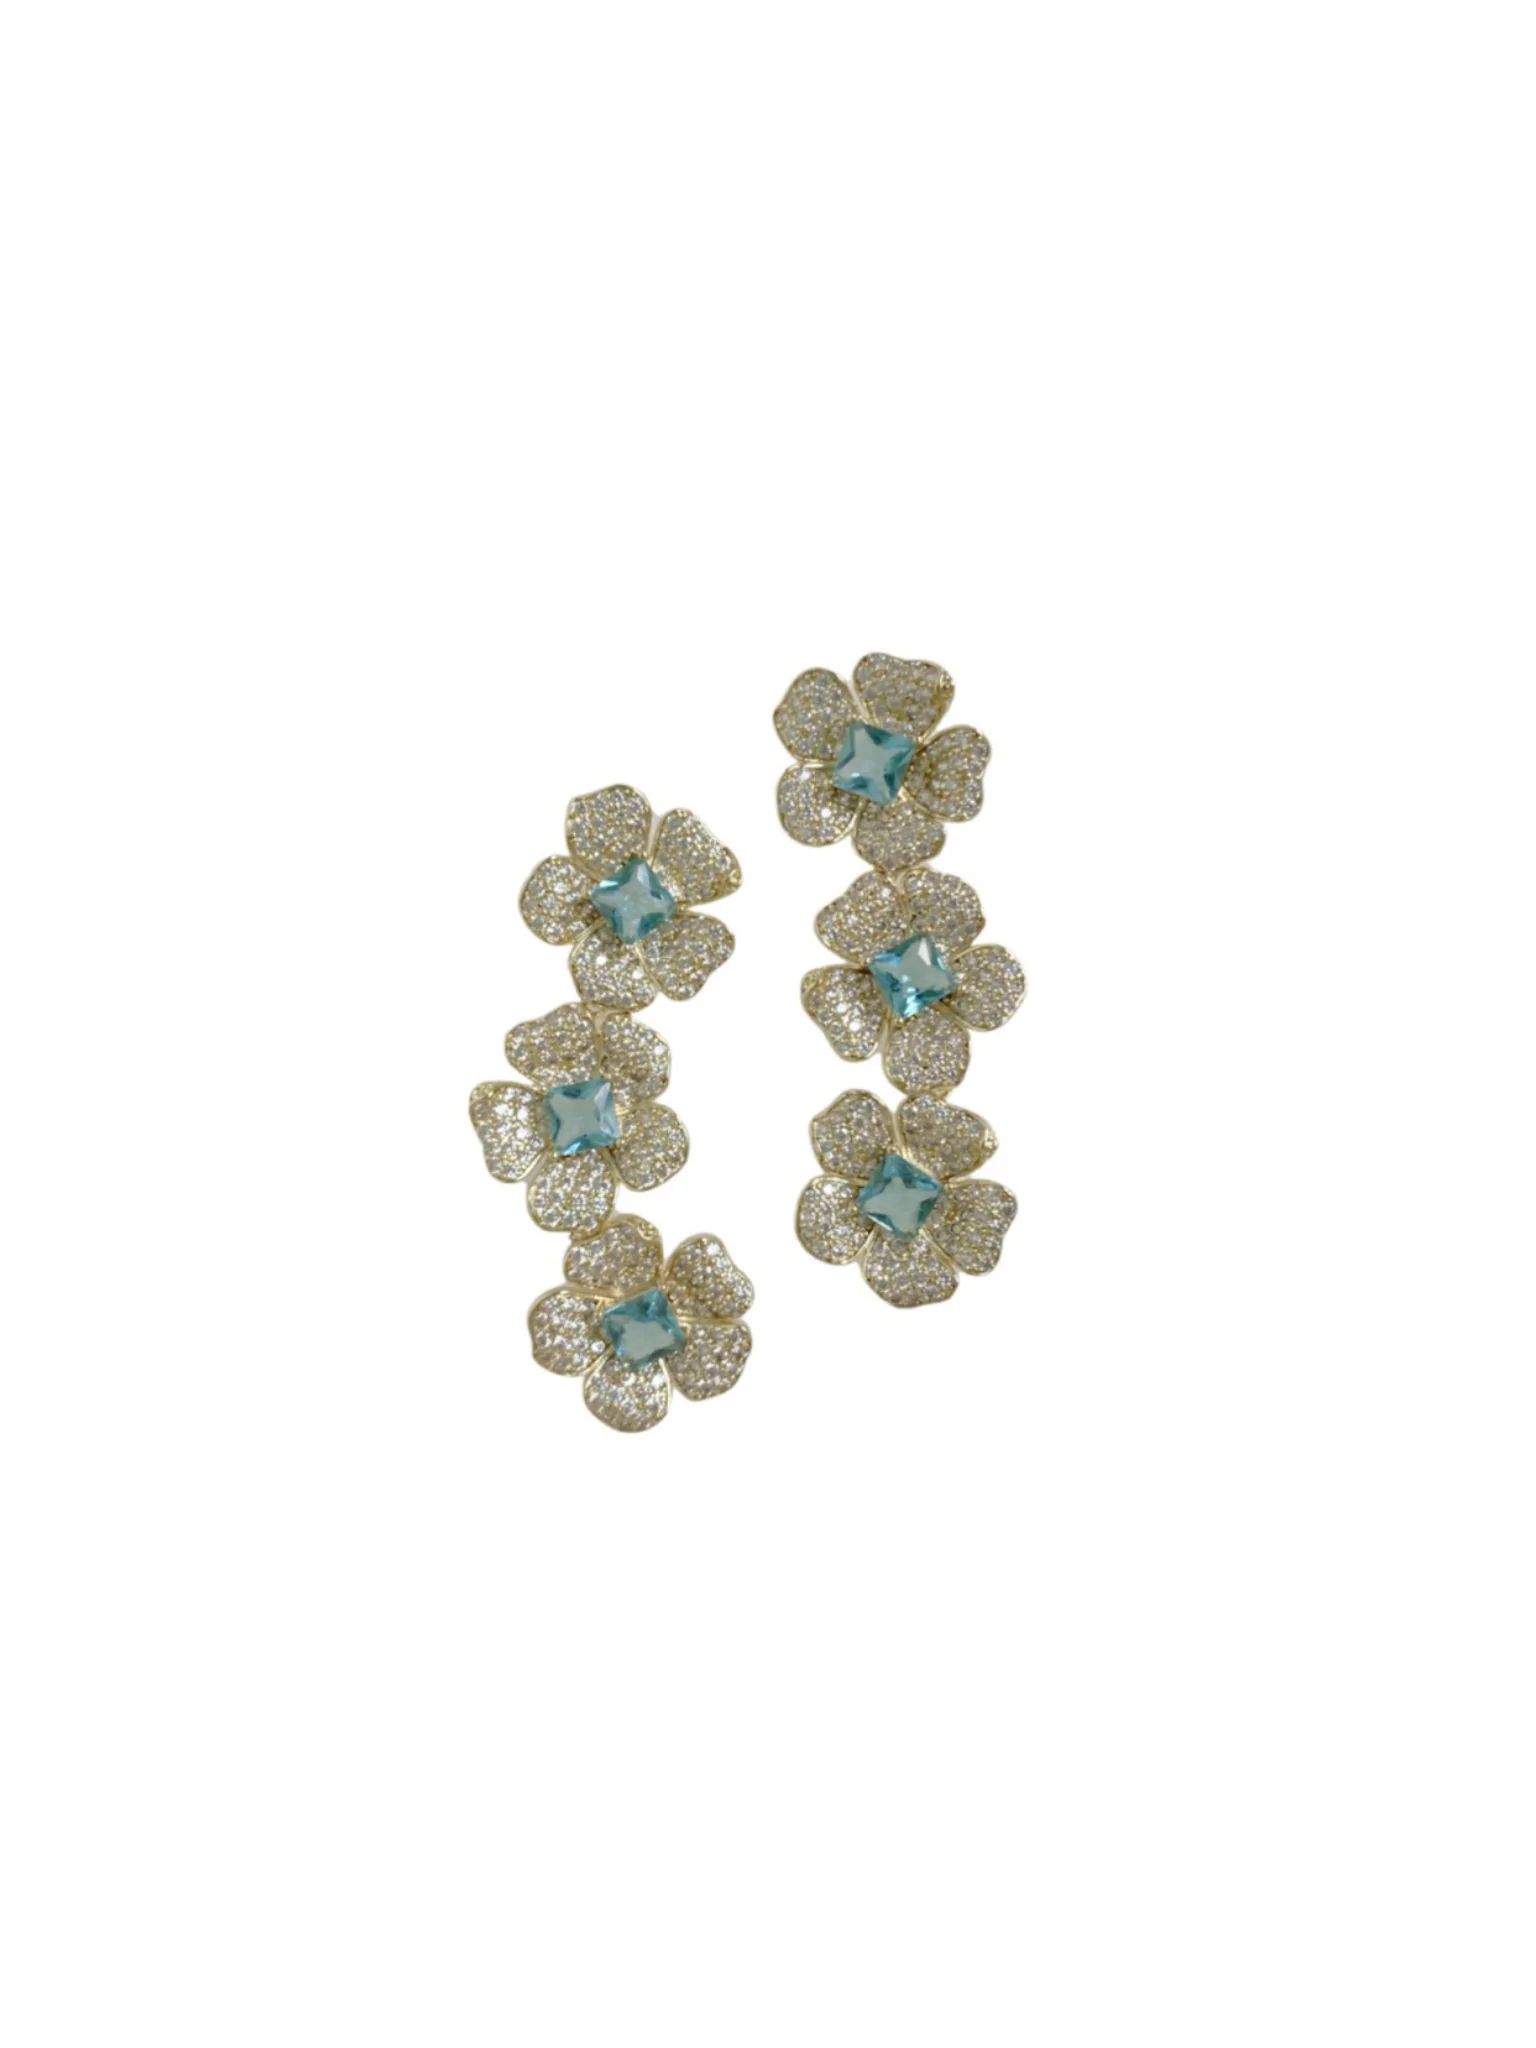 Chelsea Garden Flower drops | Nicola Bathie Jewelry